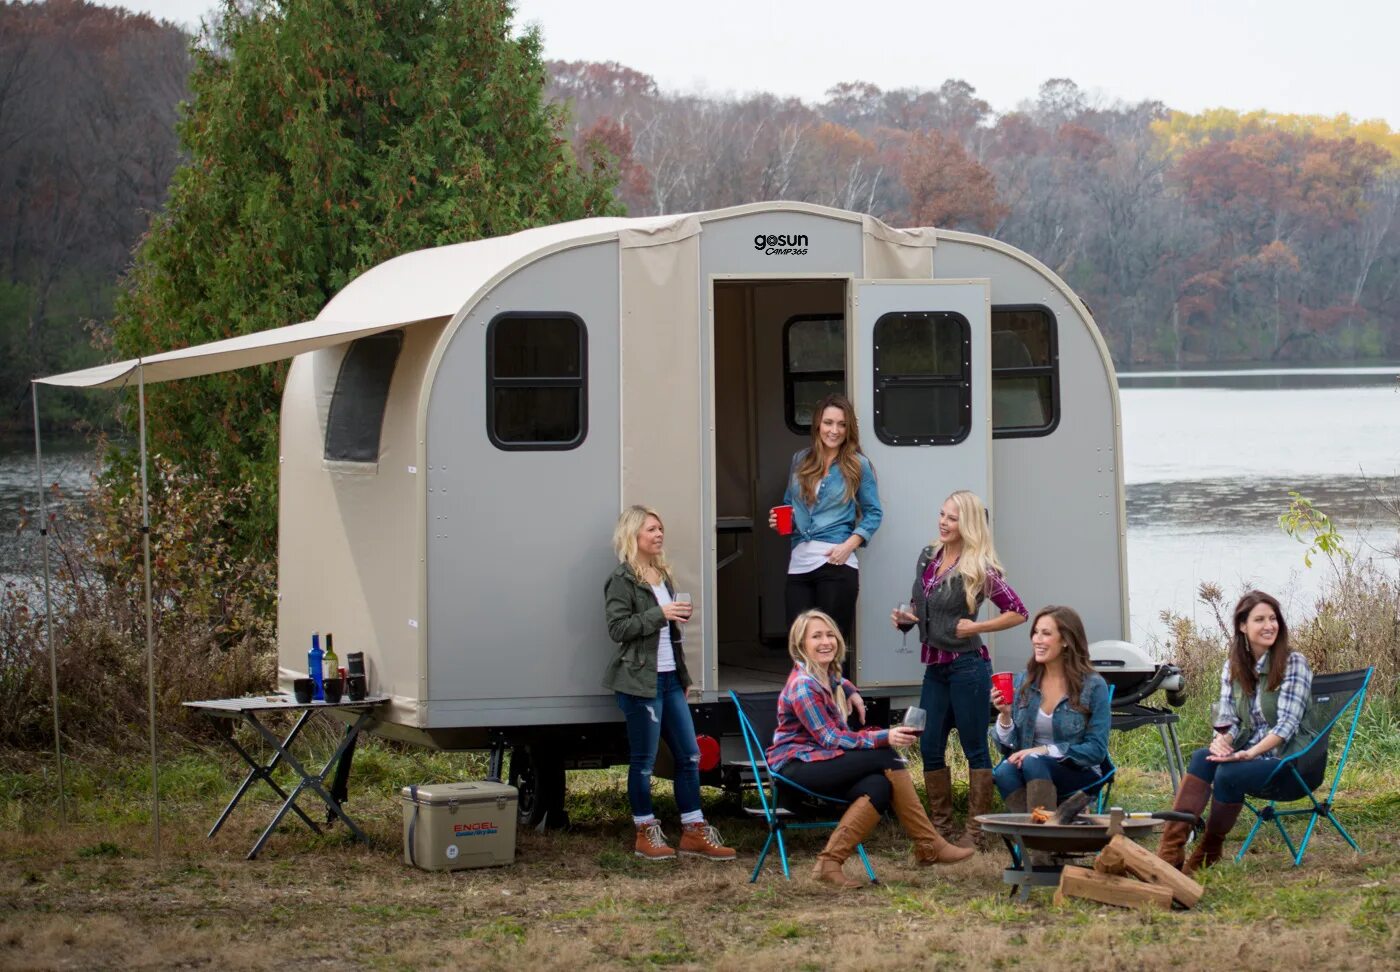 GOSUN camp365. Beauer 3x Expandable Camping Trailer. Trailer Camp. Pop up Camping Trailer.